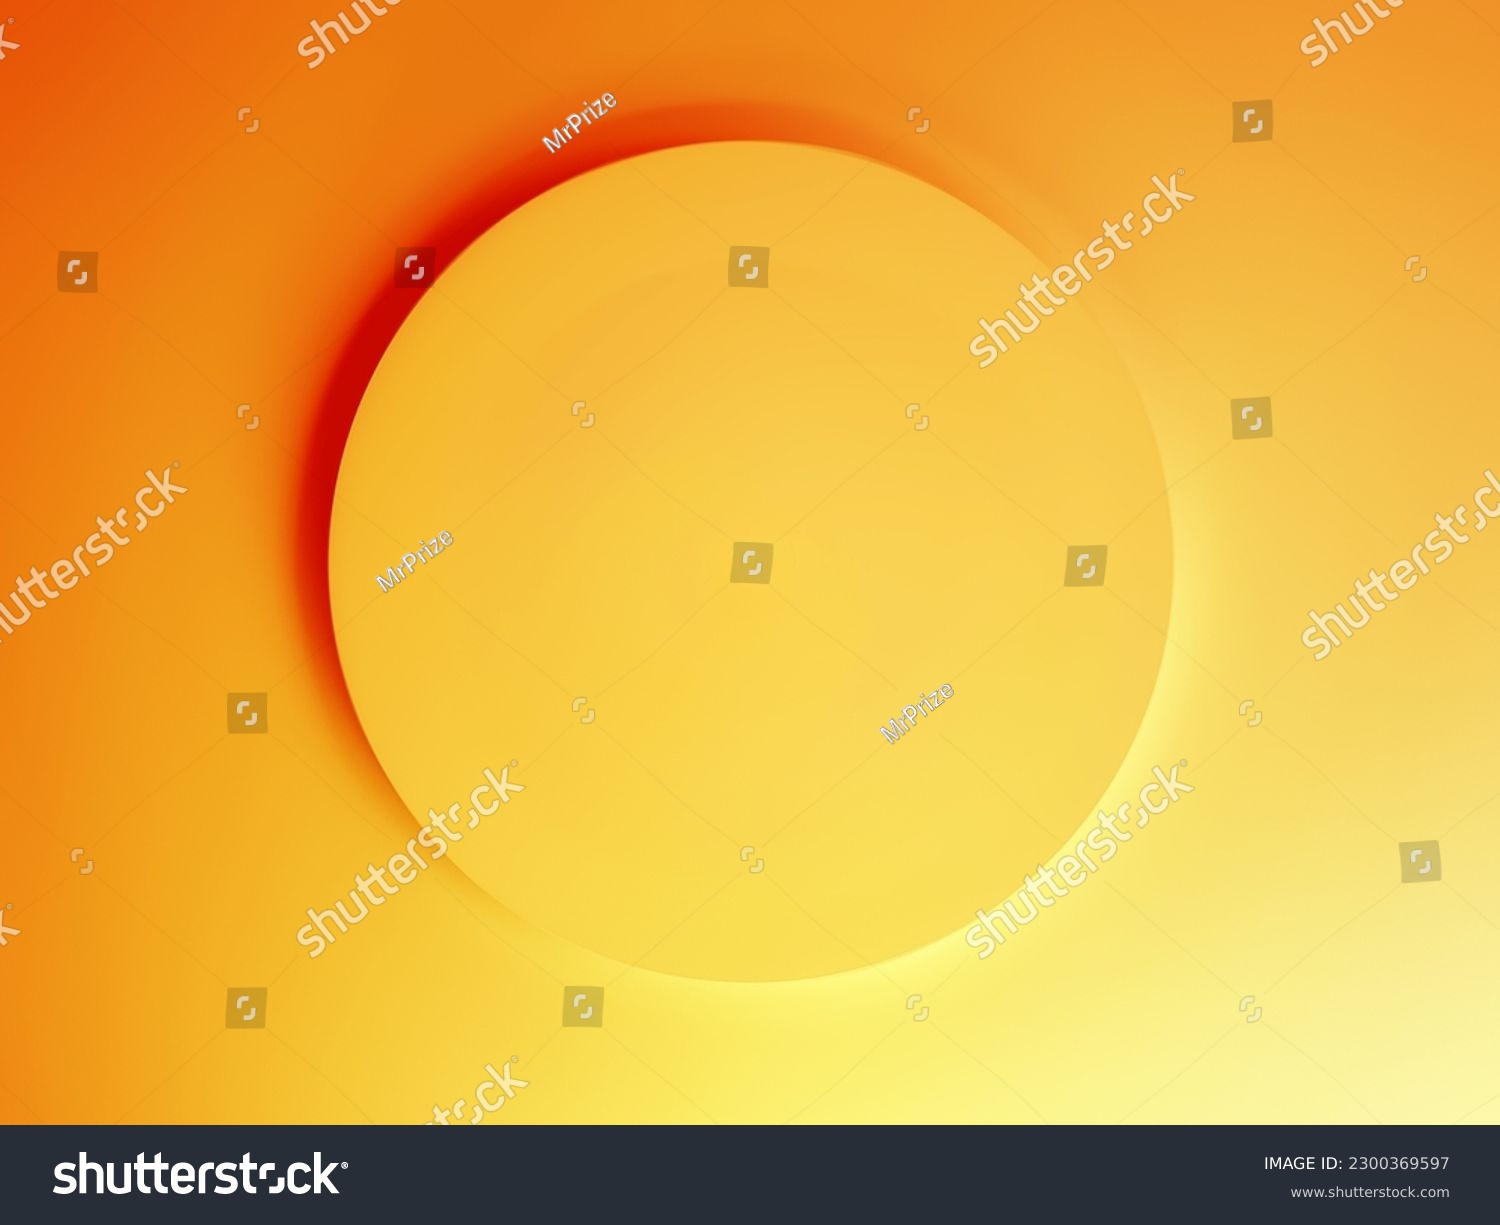 Abstract blur orange circle light effect background #2300369597